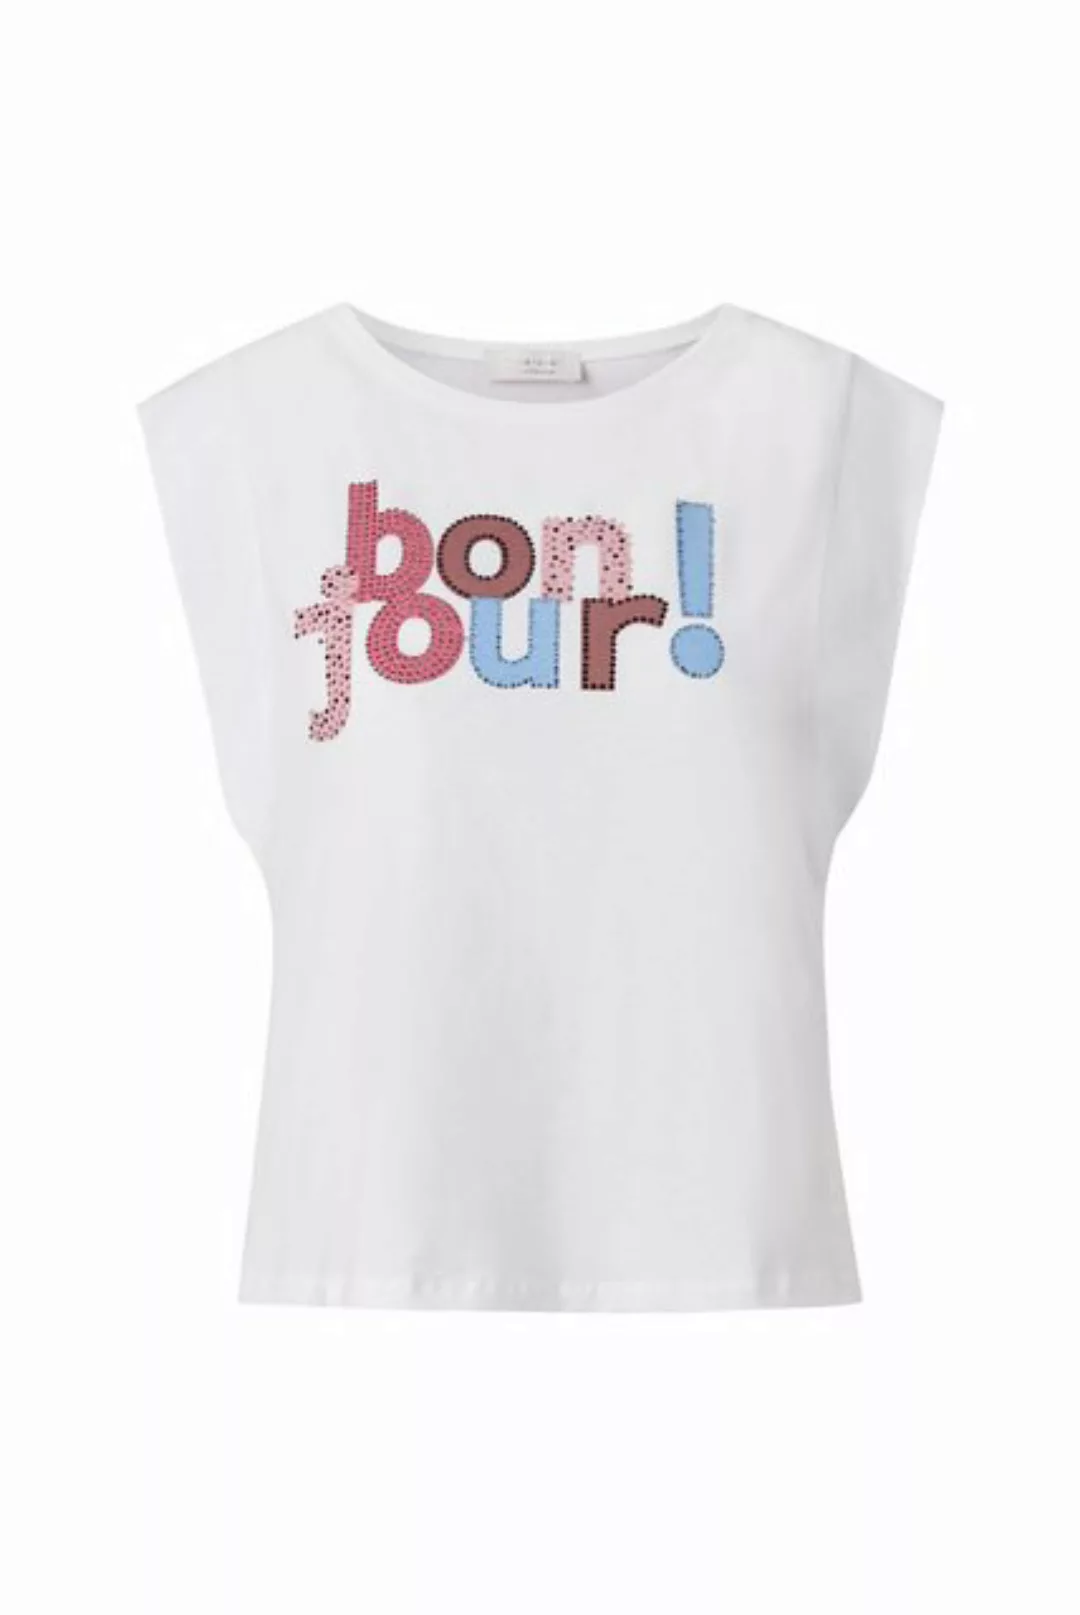 Rich & Royal T-Shirt top with print boujour! organic günstig online kaufen